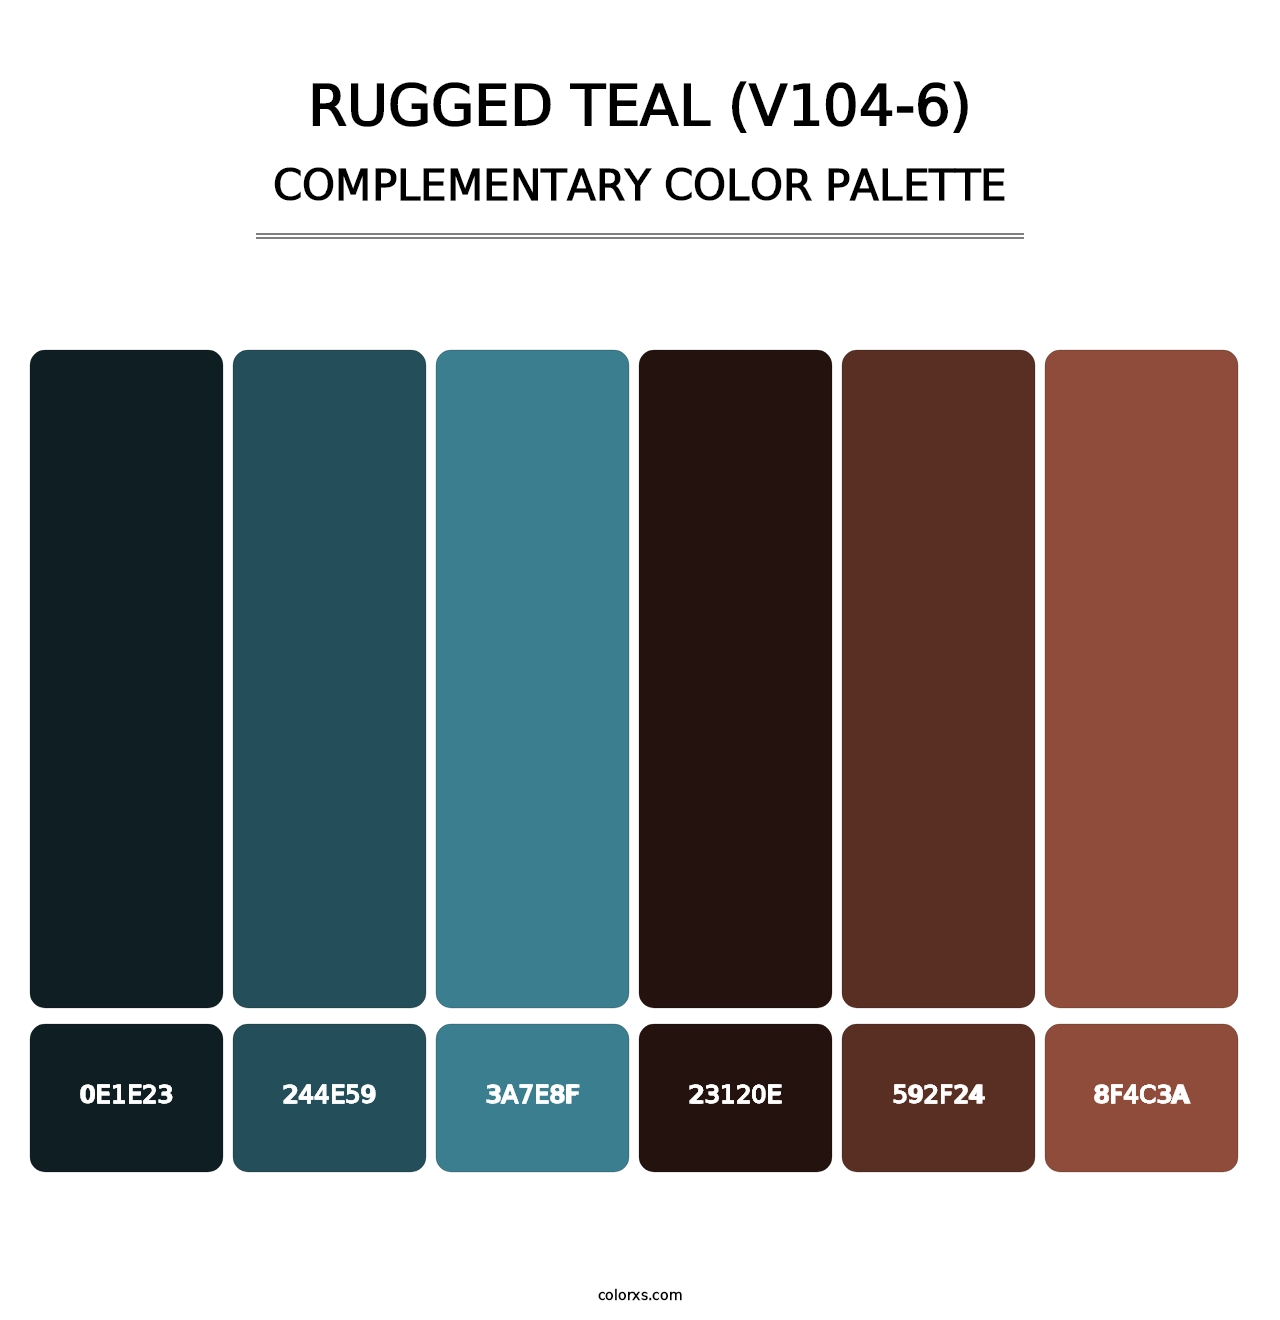 Rugged Teal (V104-6) - Complementary Color Palette